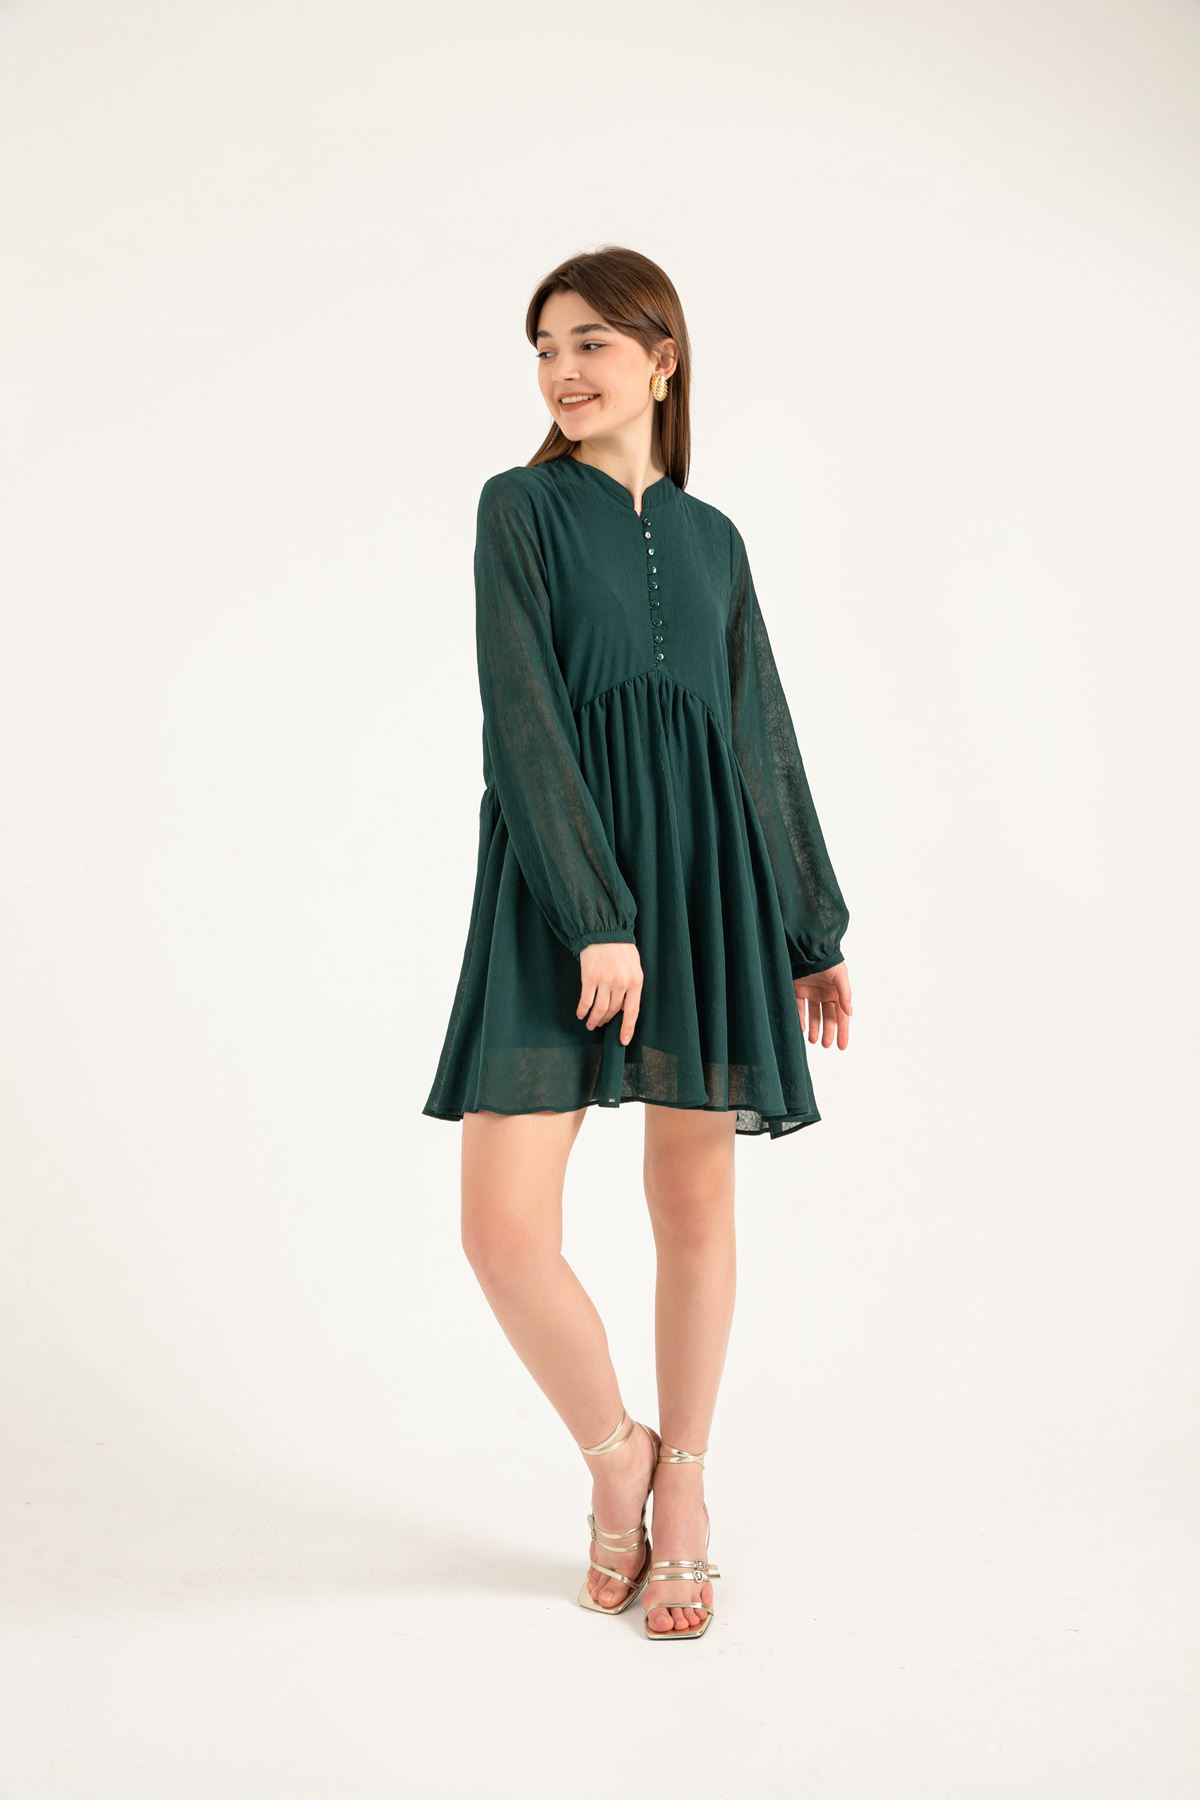 فستان نسائي قماش شيفون ياقة قصير قالب مريح - زمرد-اخضر